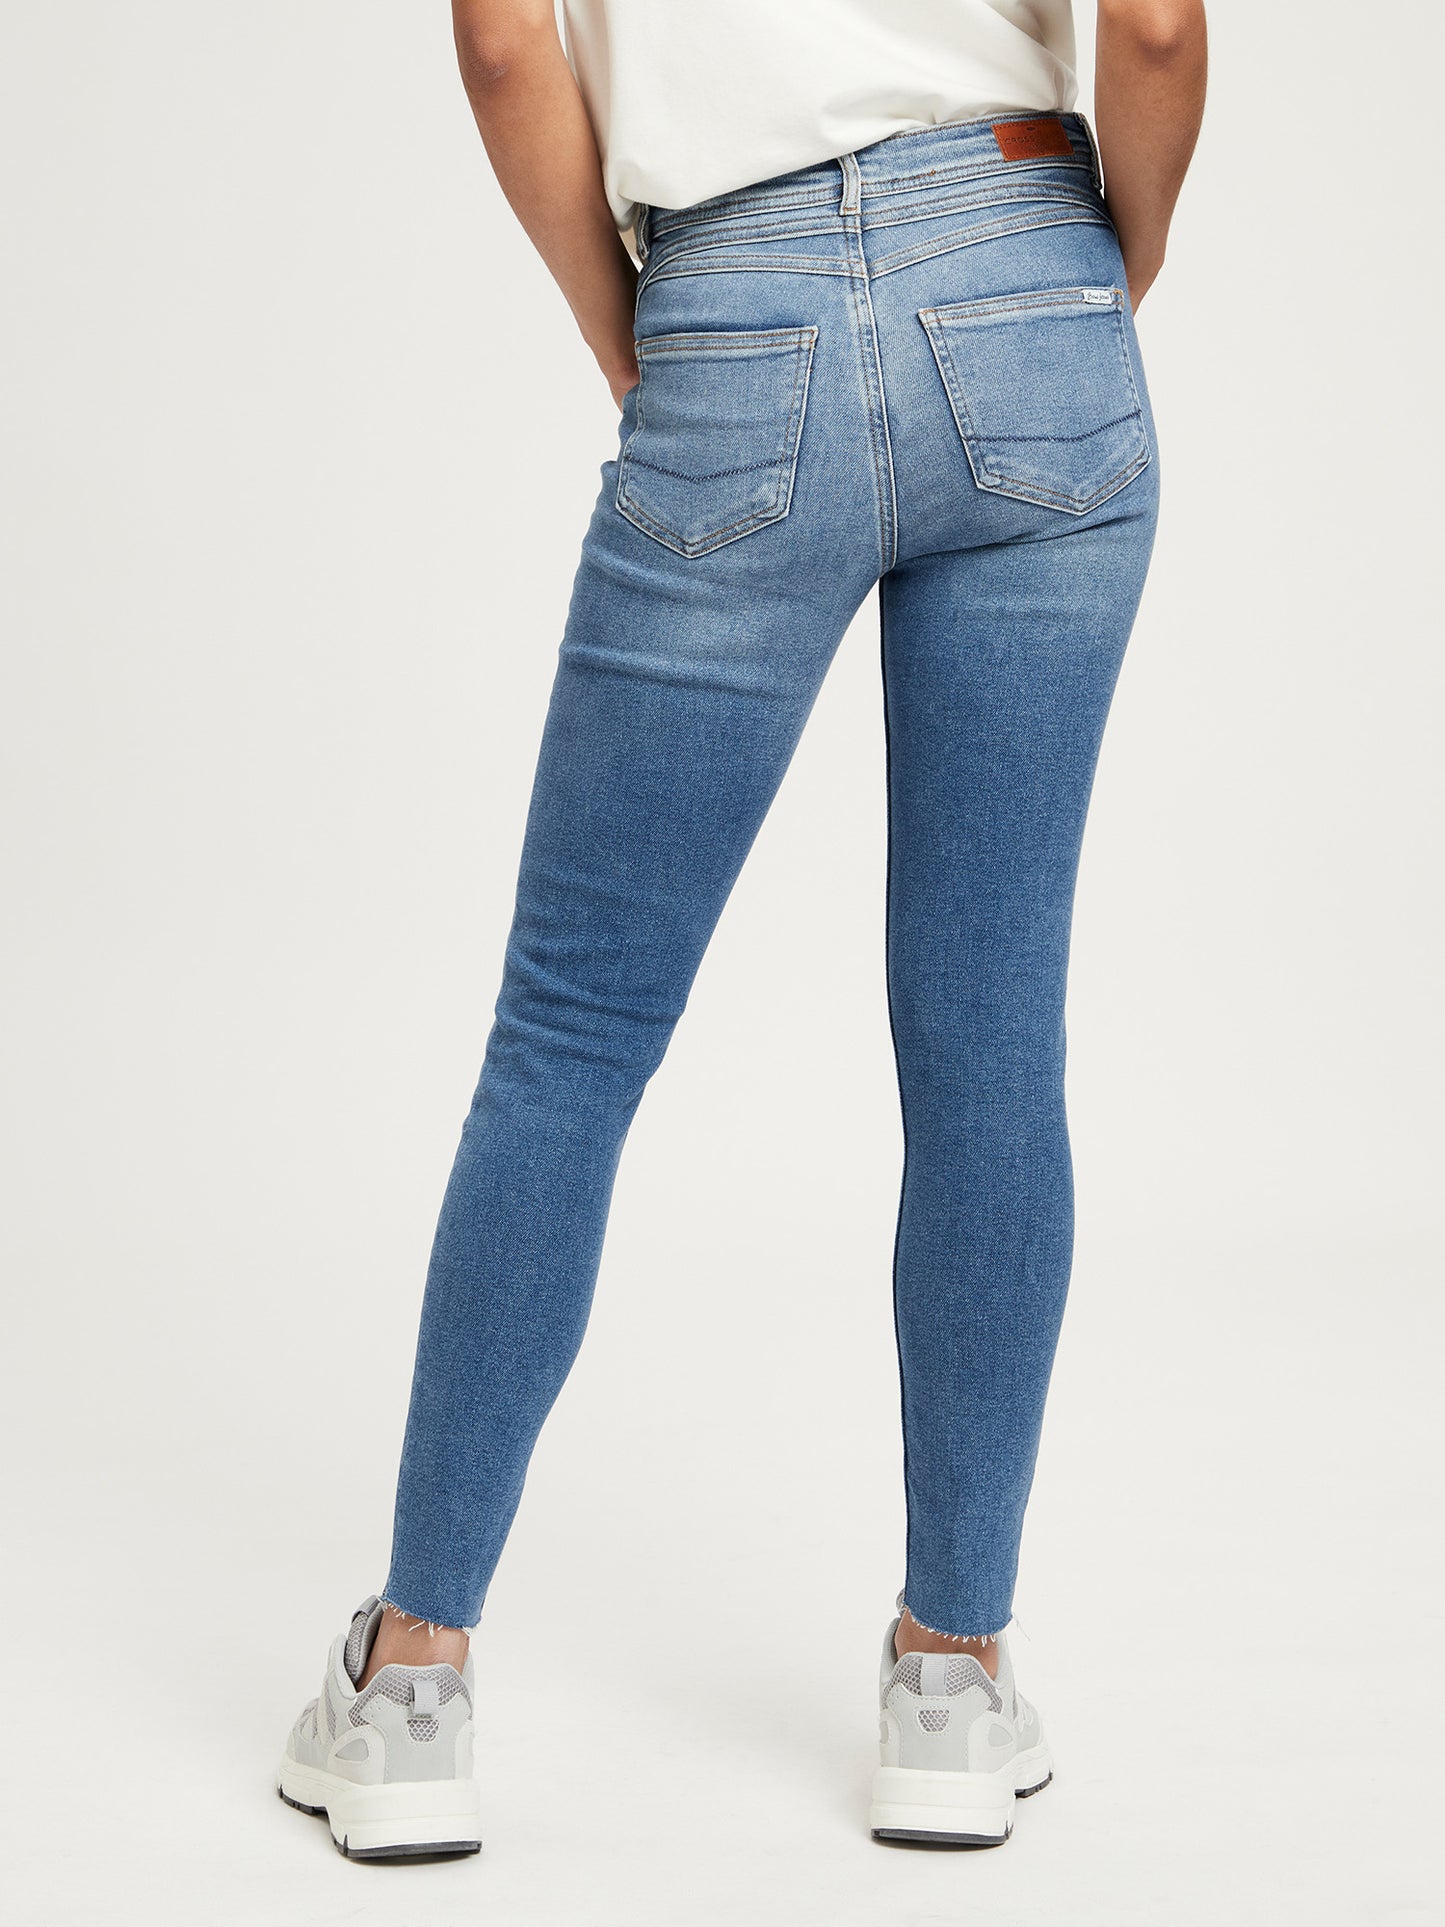 Judy Damen Jeans Super Skinny Fit High Waist Ankle Lenght mittelblau